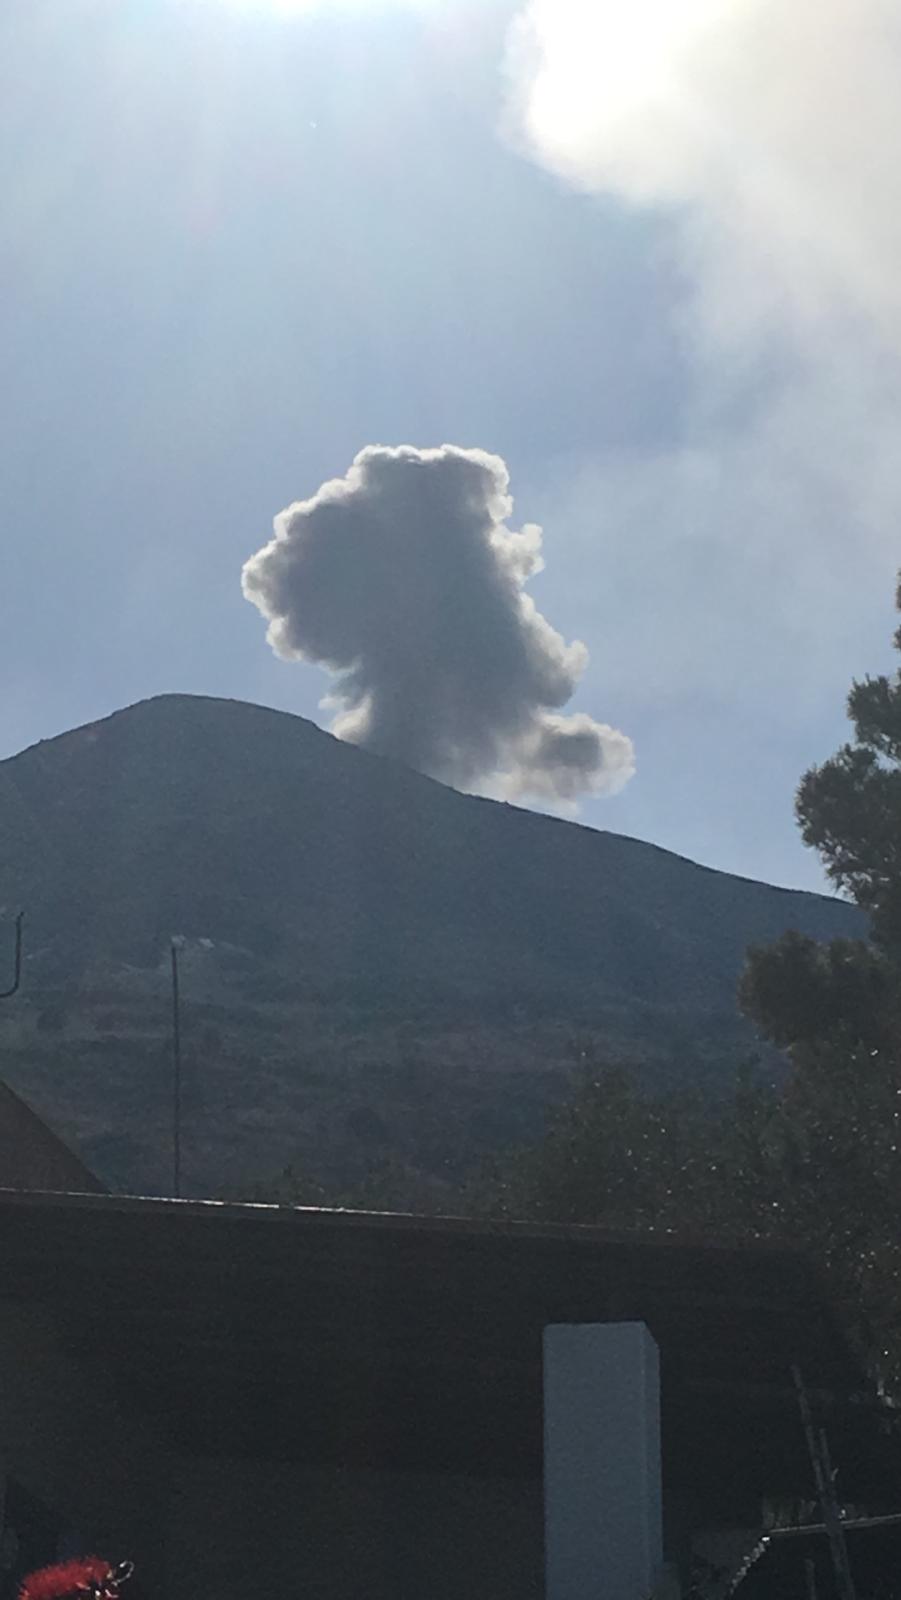 Ash plume from an eruption at Stromboli a few minutes ago (image: Francesca Utano)